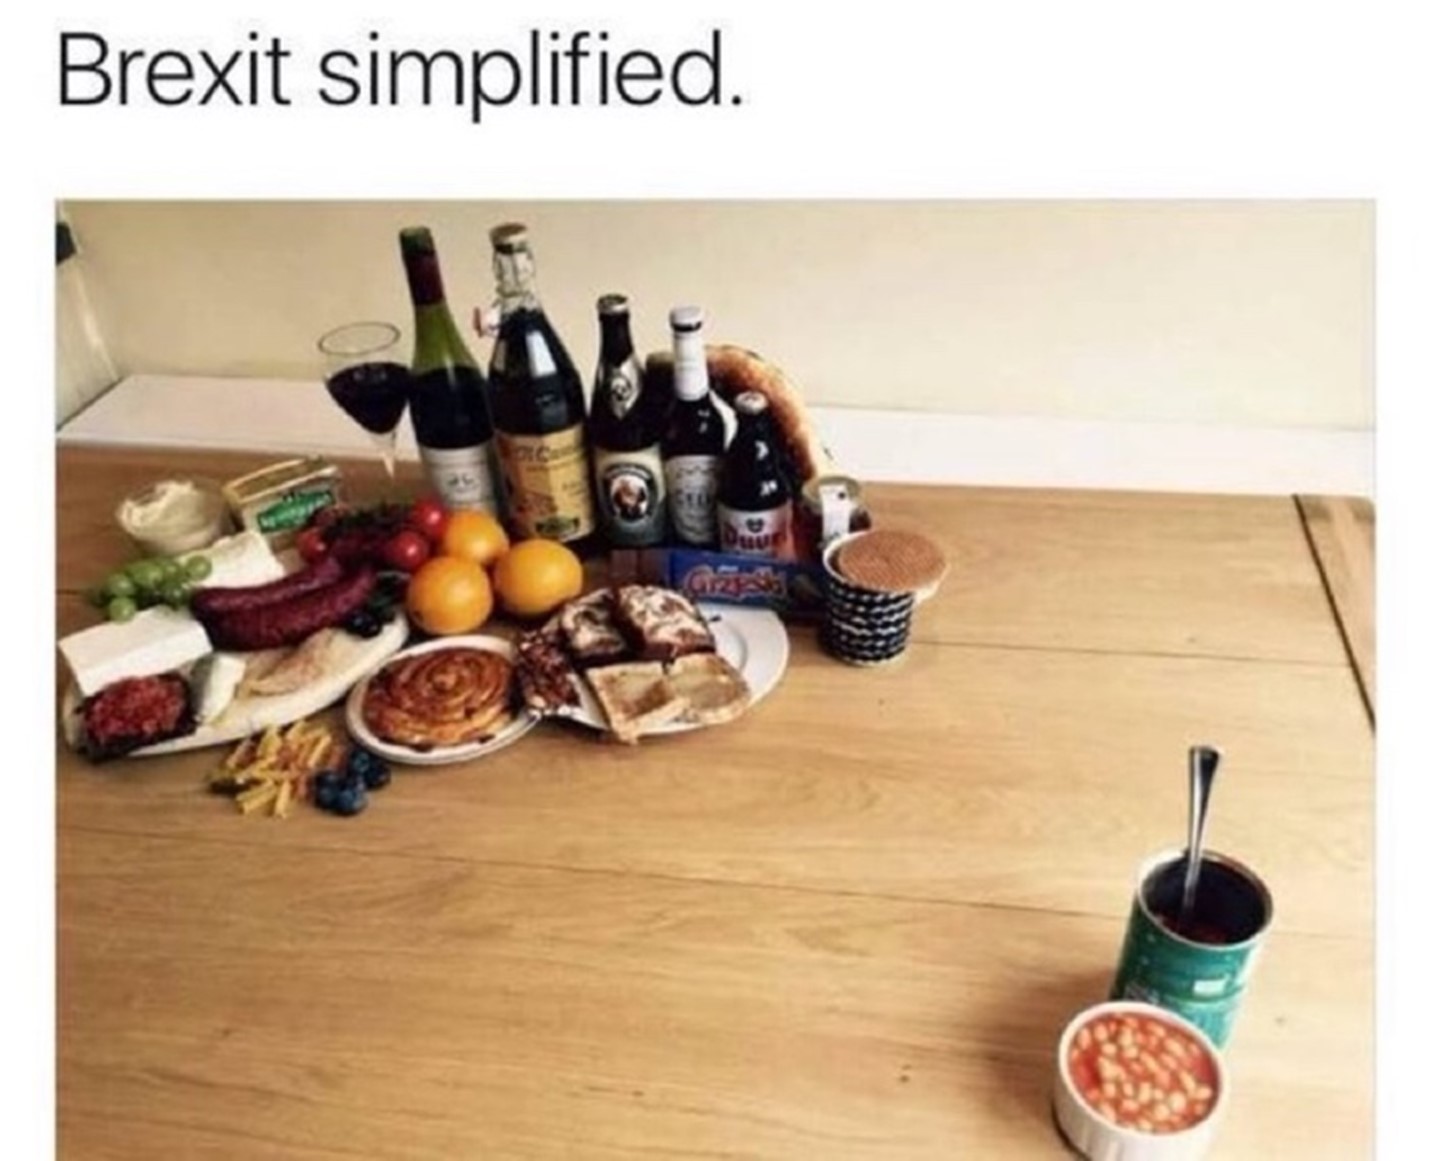 Twitter depiction of post-Brexit cuisine